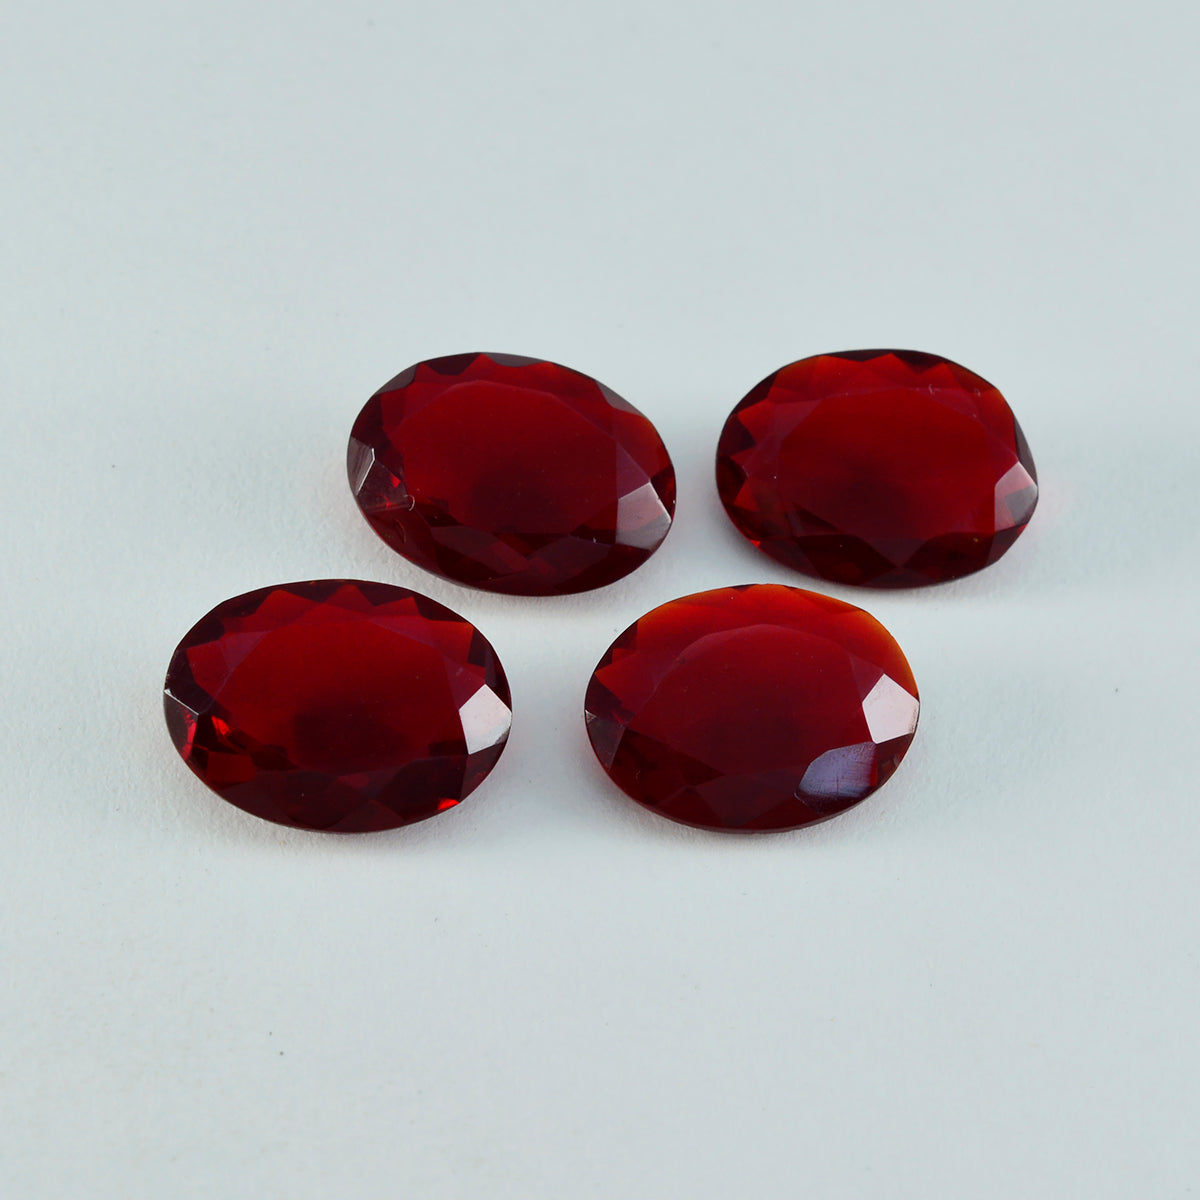 Riyogems 1PC Red Ruby CZ Faceted 12x16 mm Oval Shape wonderful Quality Loose Gemstone